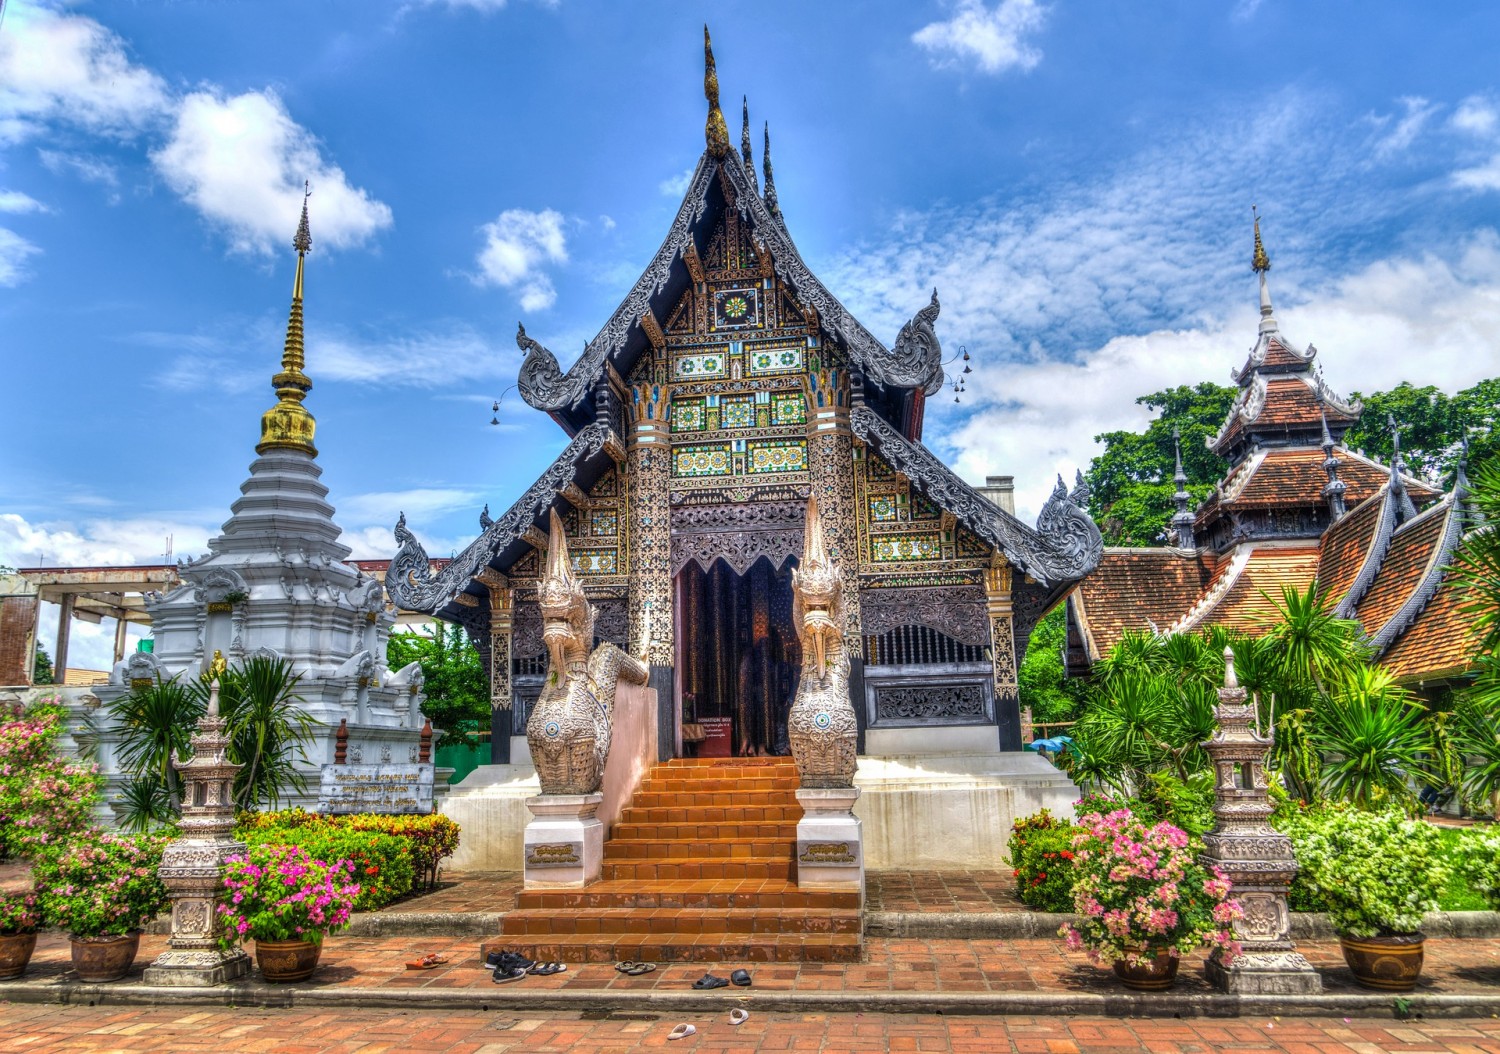 Chiang Mai.  Dört harika Güneydoğu Asya seyahat programı I Fotoğrafçılık I Yol Programı I Manzara I Yemek I Mimarlık I Laos I Tayland I Kamboçya I Myanmar I Malezya I Vietnam.  Seyahat rehberinin tamamını şimdi okuyun #seyahat #backpacking